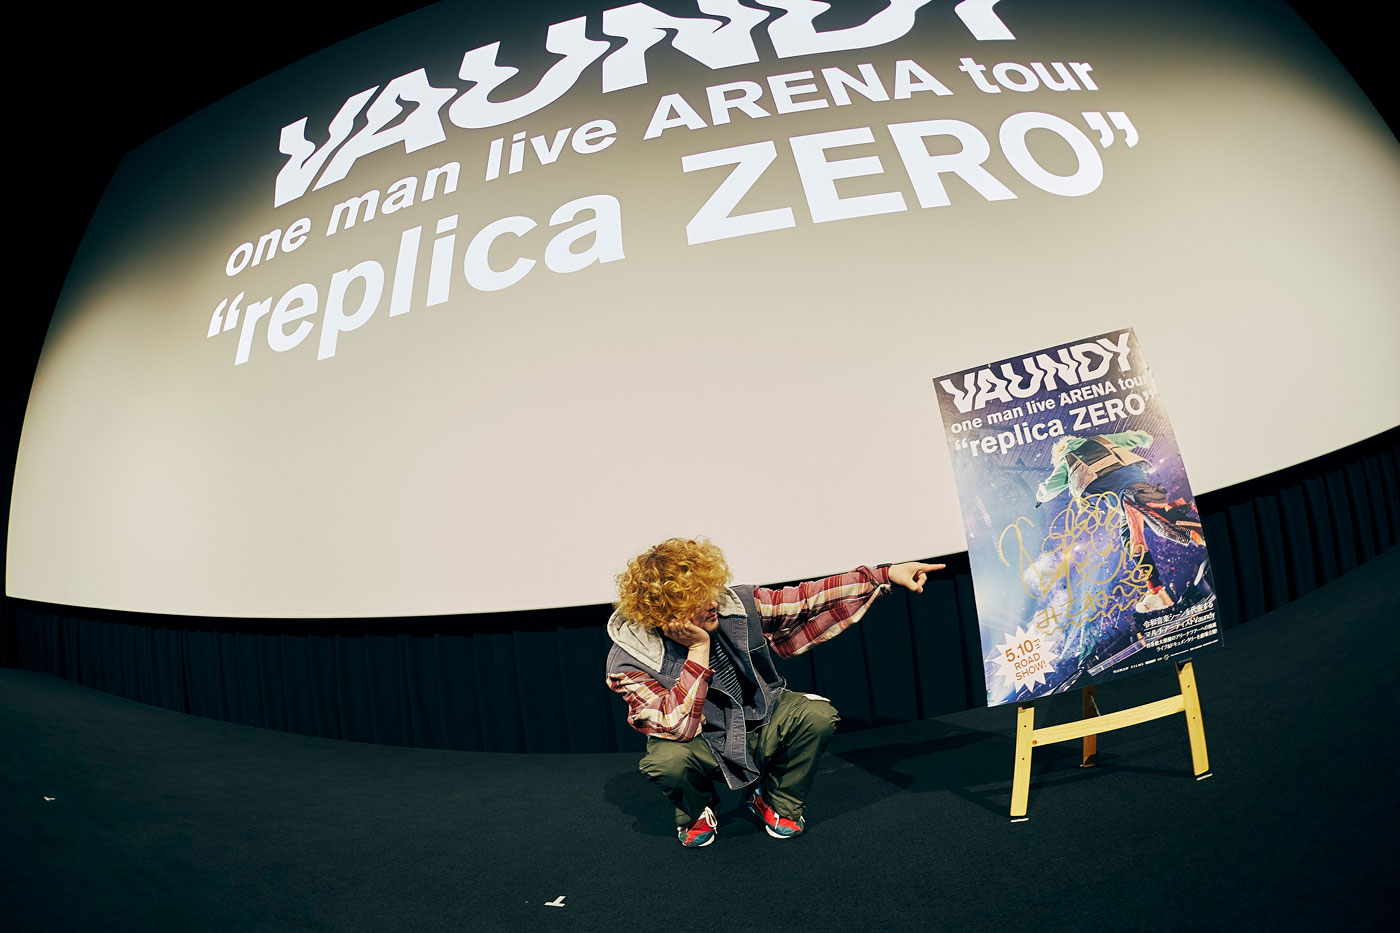 劇場版 Vaundy one man live ARENA tour“replica ZERO”